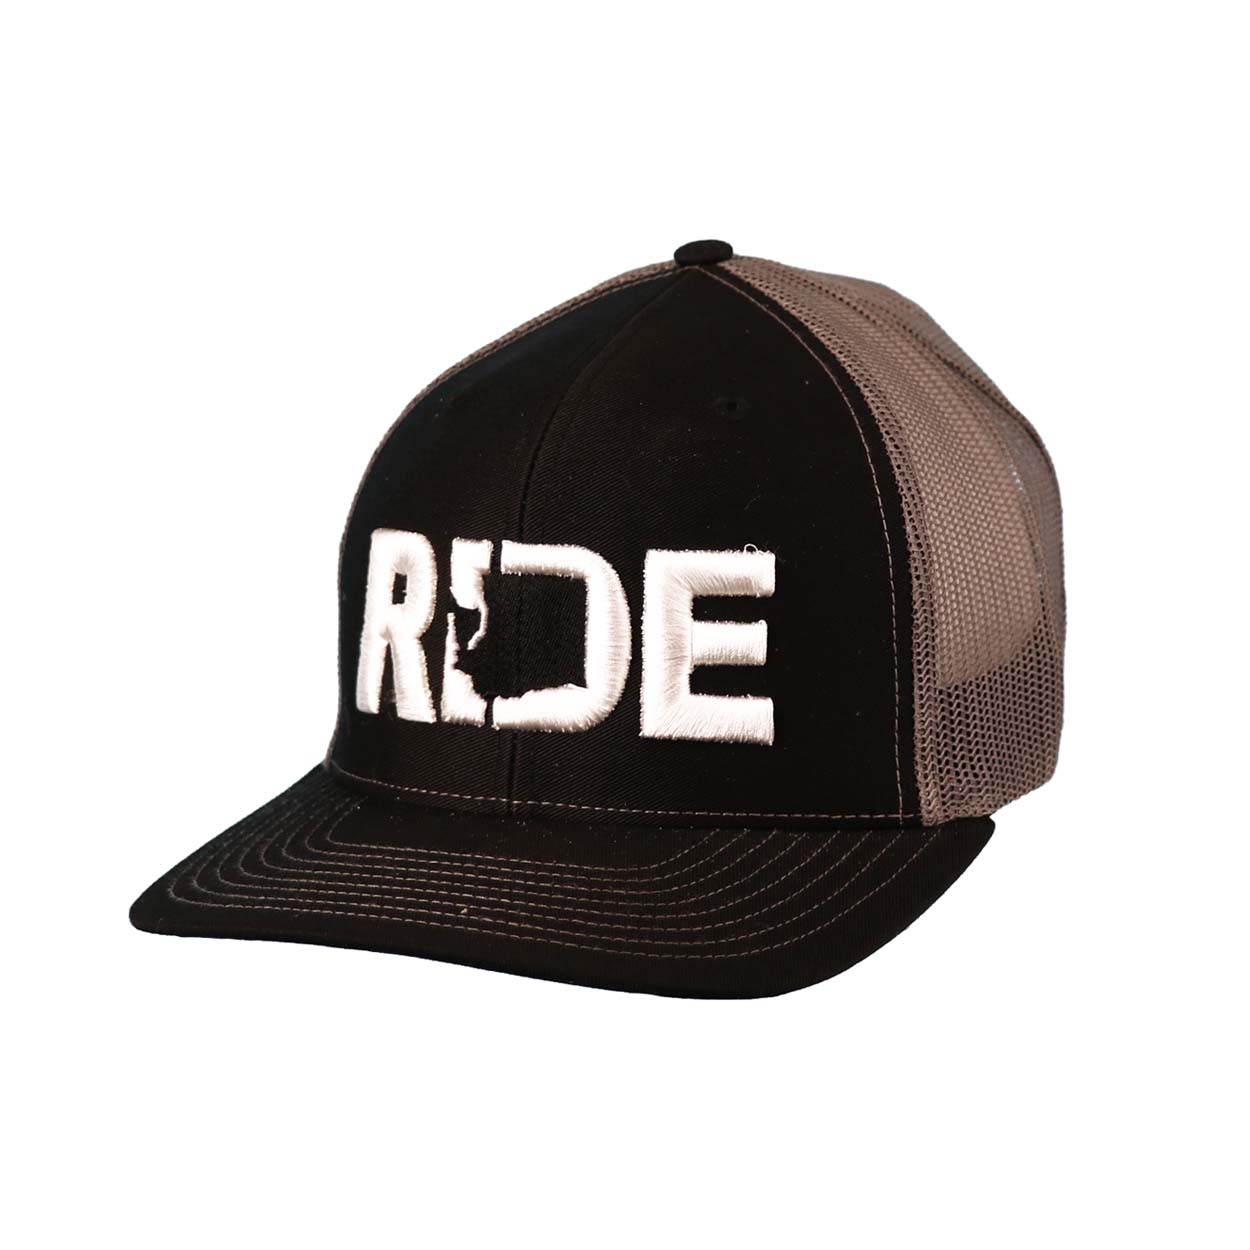 Ride Washington Classic Pro 3D Puff Embroidered Snapback Trucker Hat Black/Gray